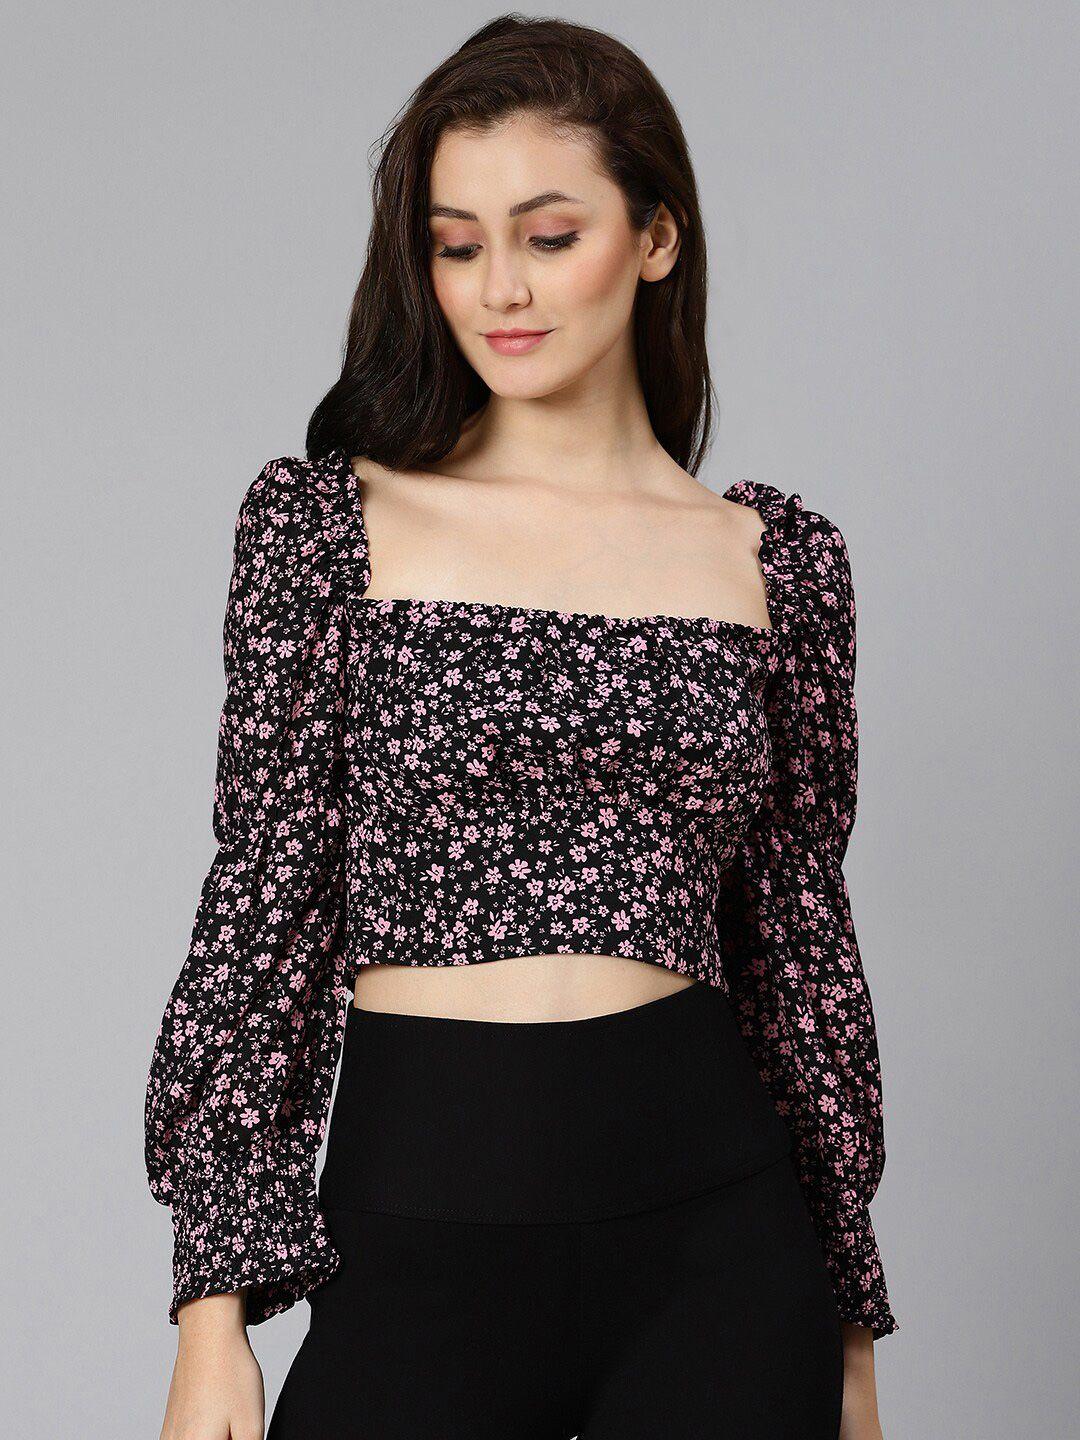 oxolloxo-women-black-&-pink-floral-printed-smocked-crop-top